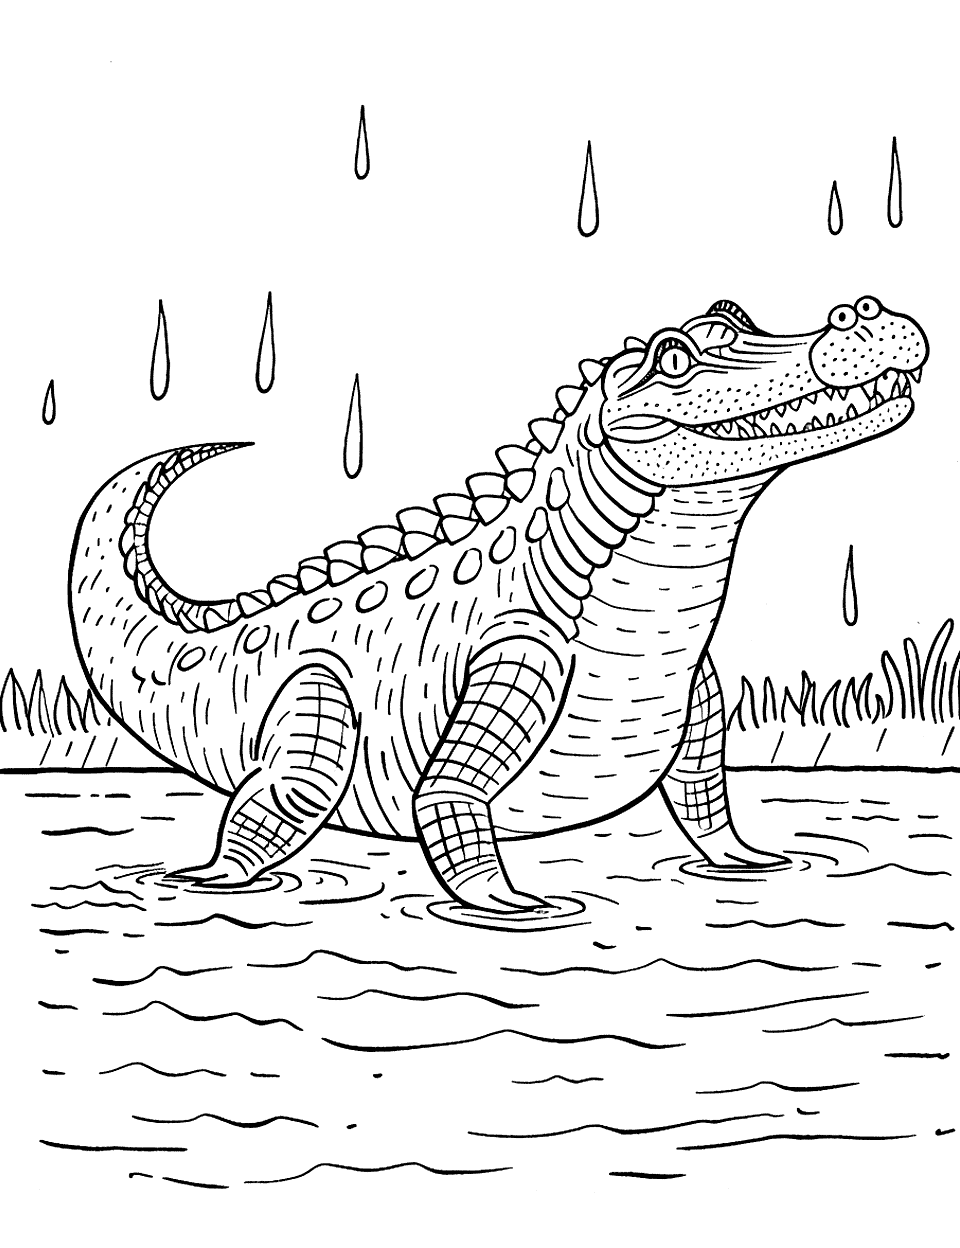 Crocodile in the Rain Coloring Page - A cheerful crocodile walking in the rain with raindrops all around.